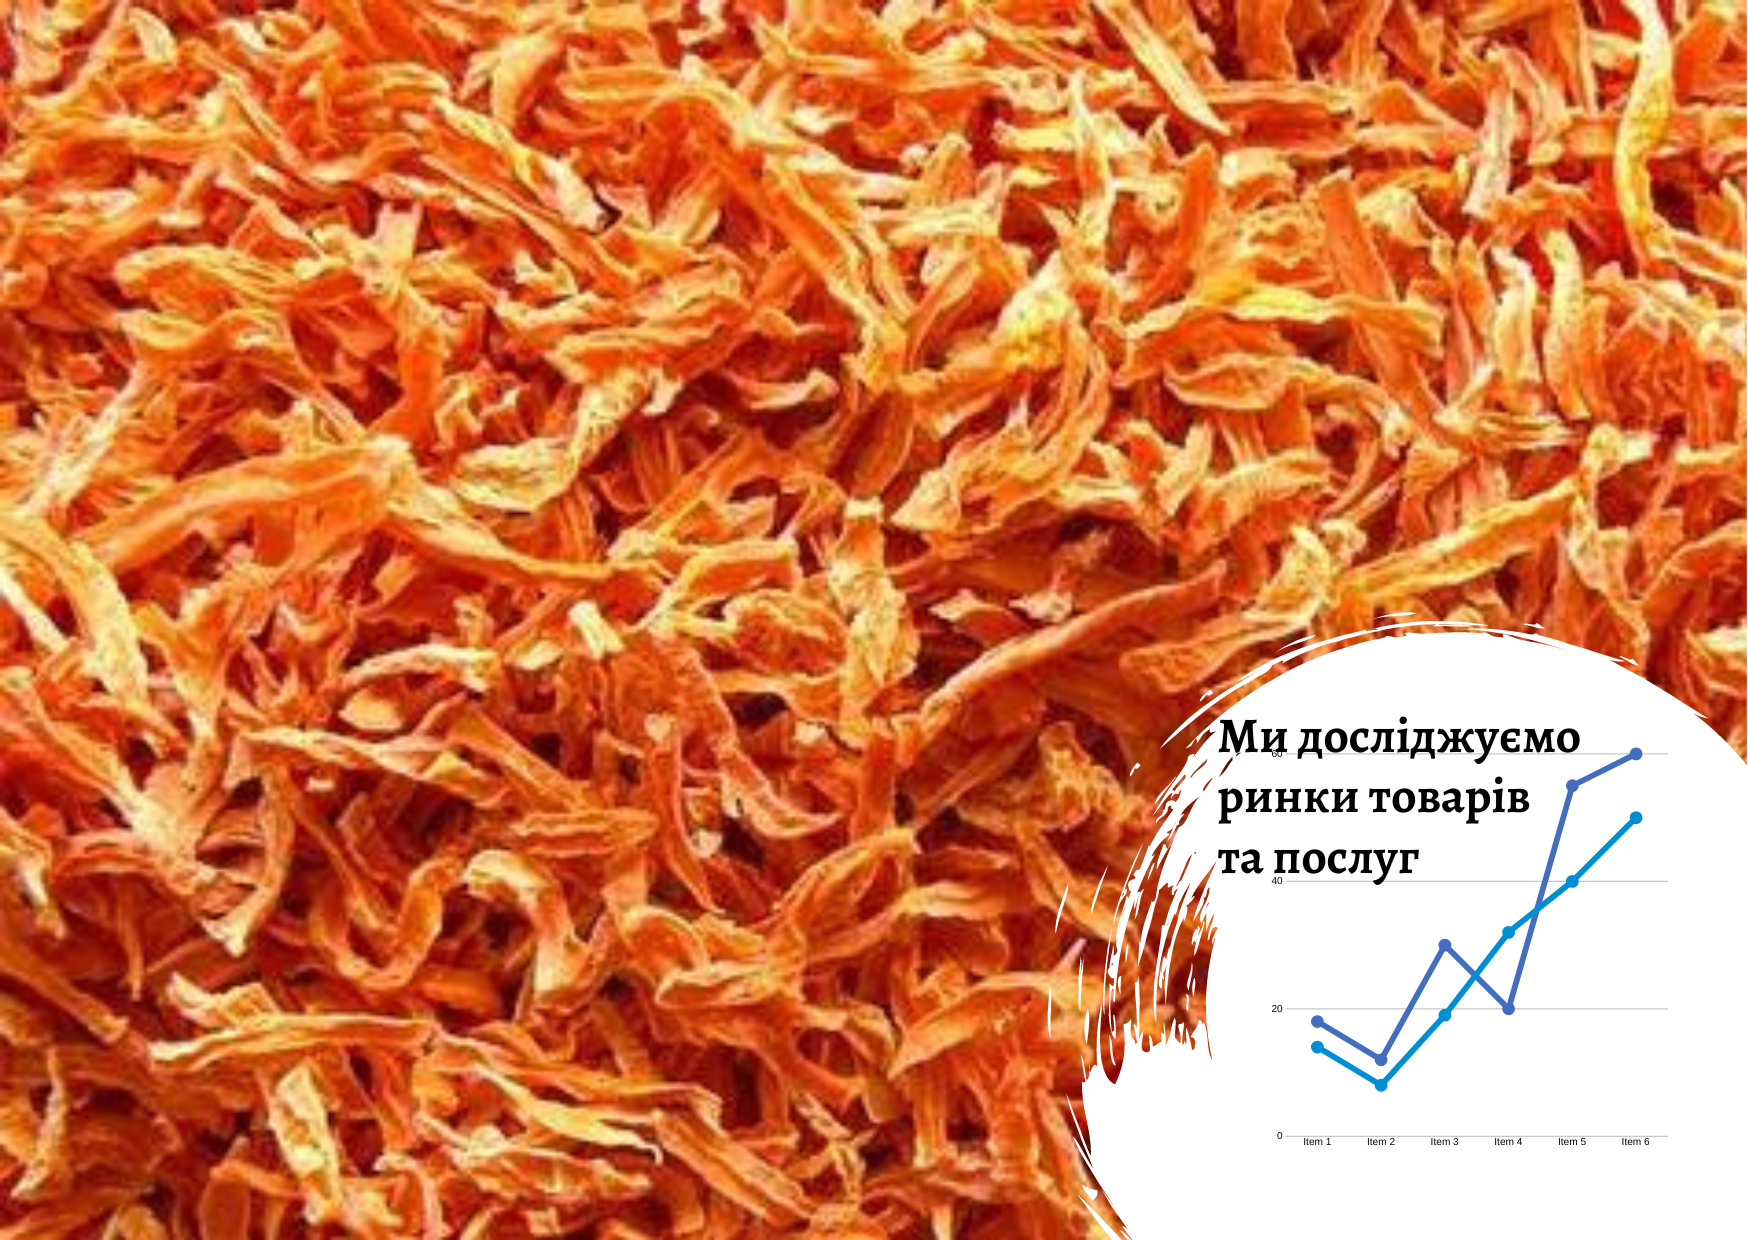 Ukrainian dried vegetables market: trends 